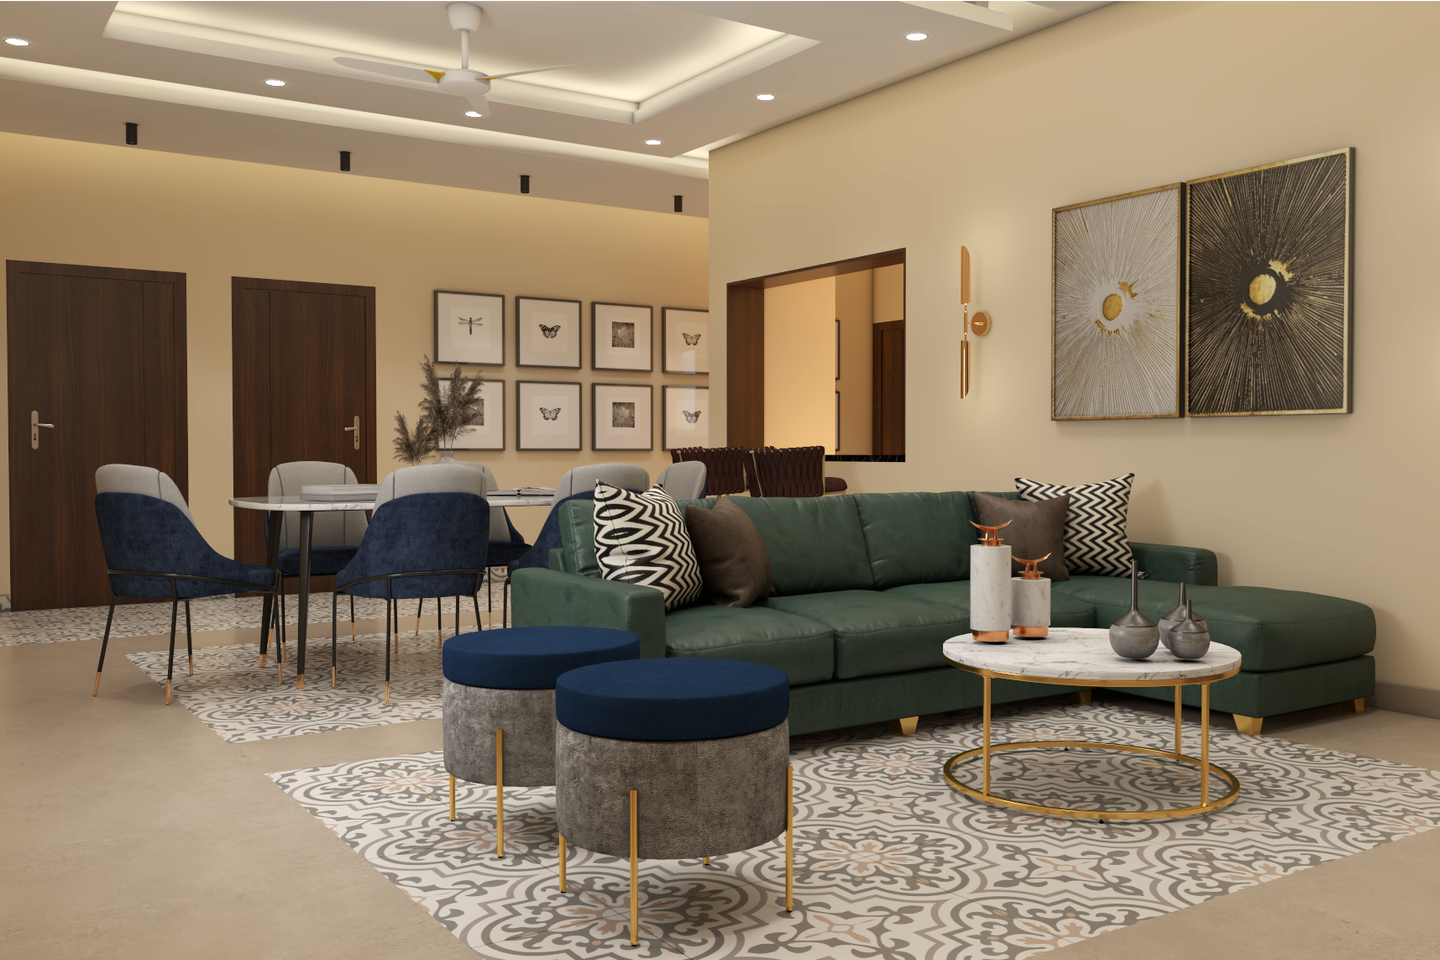 Comfortable Living Room Design - Livspace